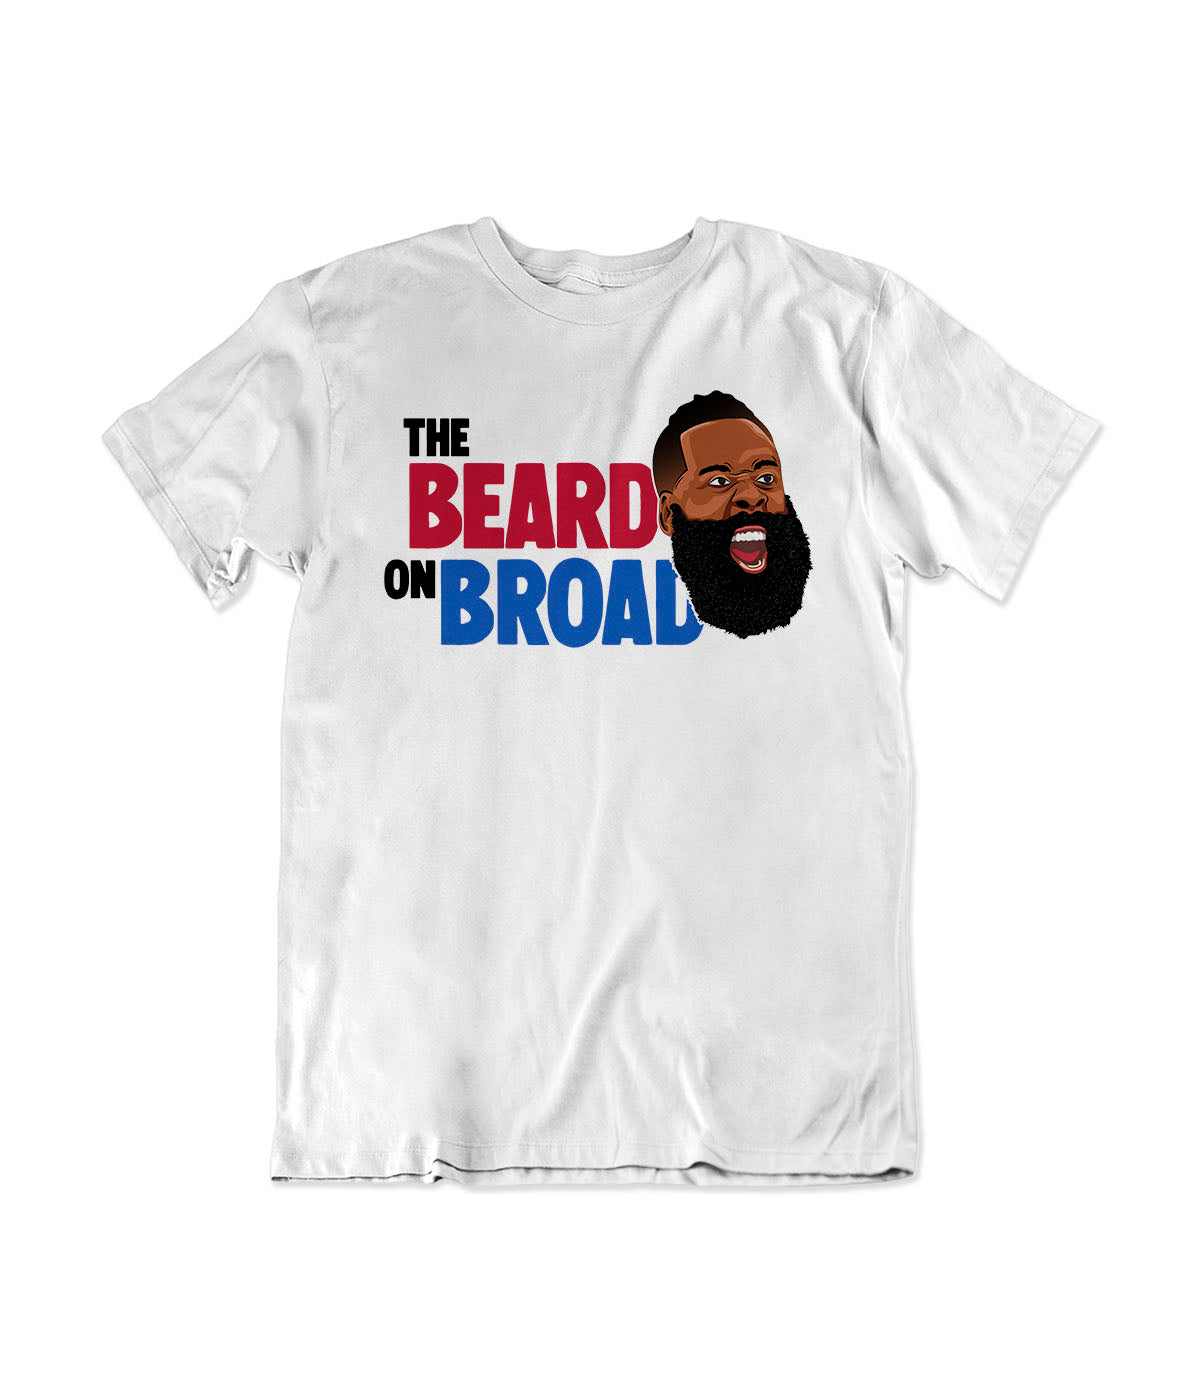 The Beard on Broad v1